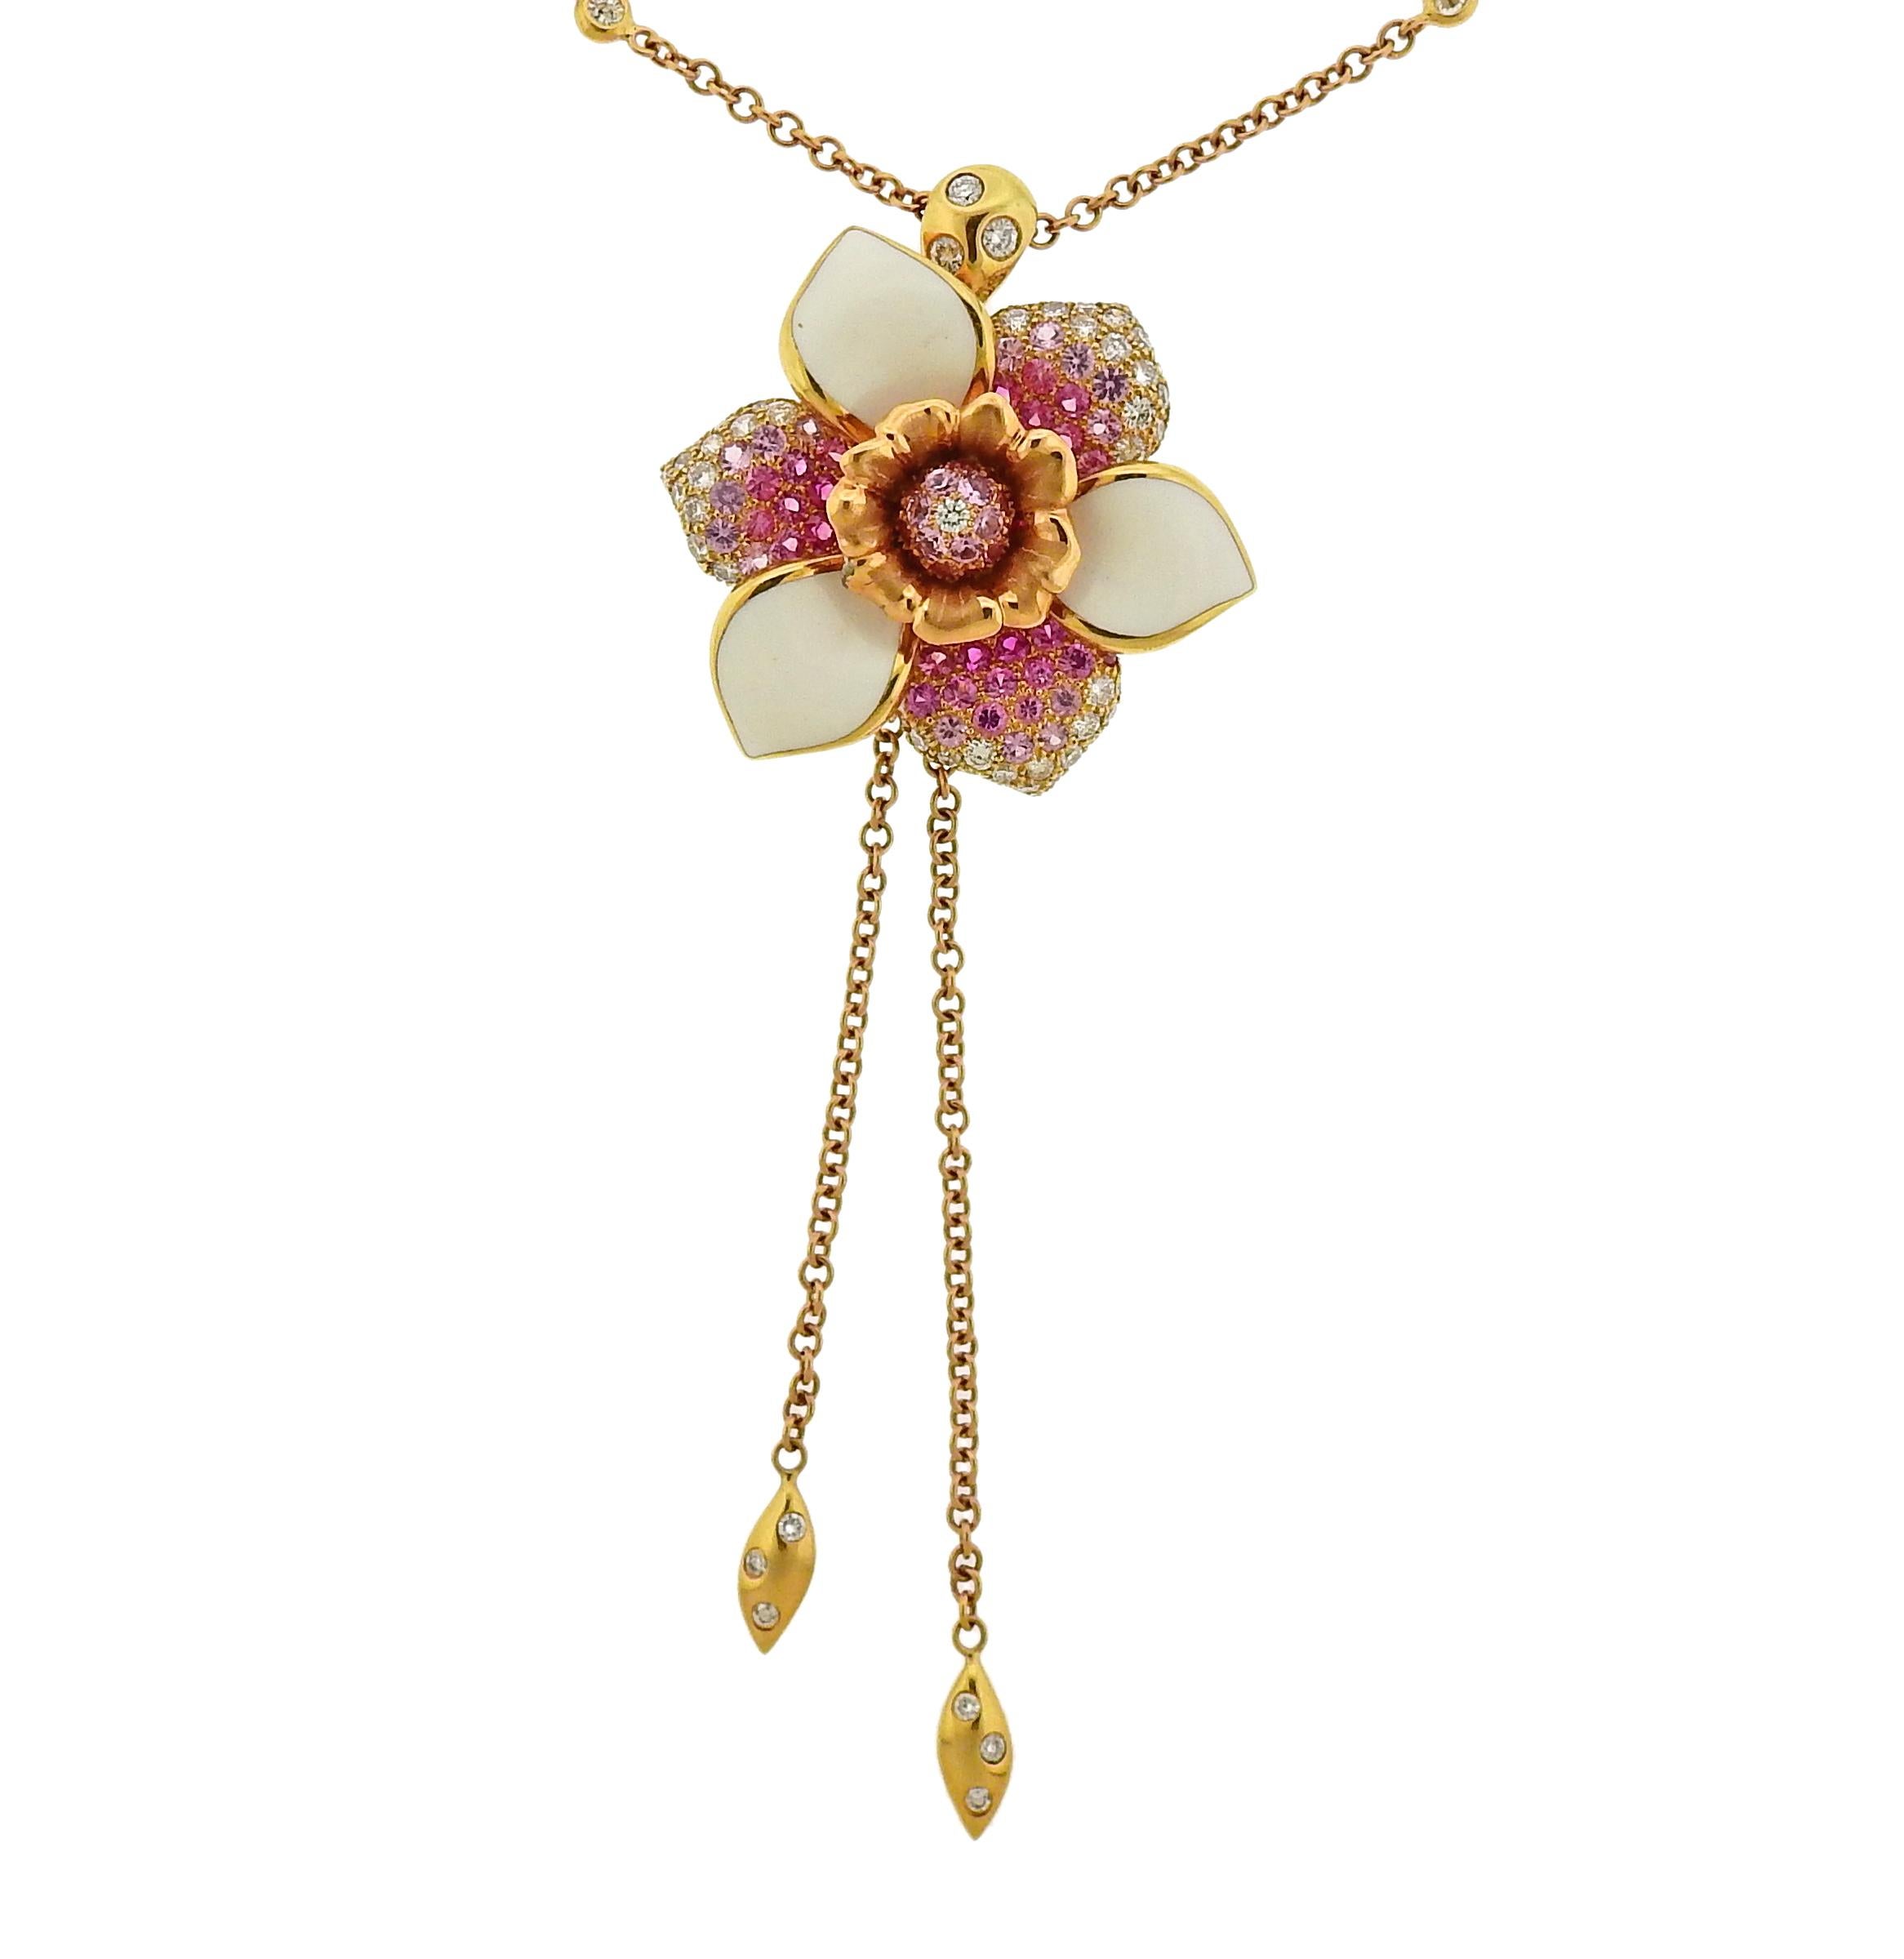 Valente flower pendant necklace in 18k gold, featuring approx. 1.67ctw in G/VS diamonds, enamel petals and approx. 2.80ctw in pink sapphires. Necklace is 17.5